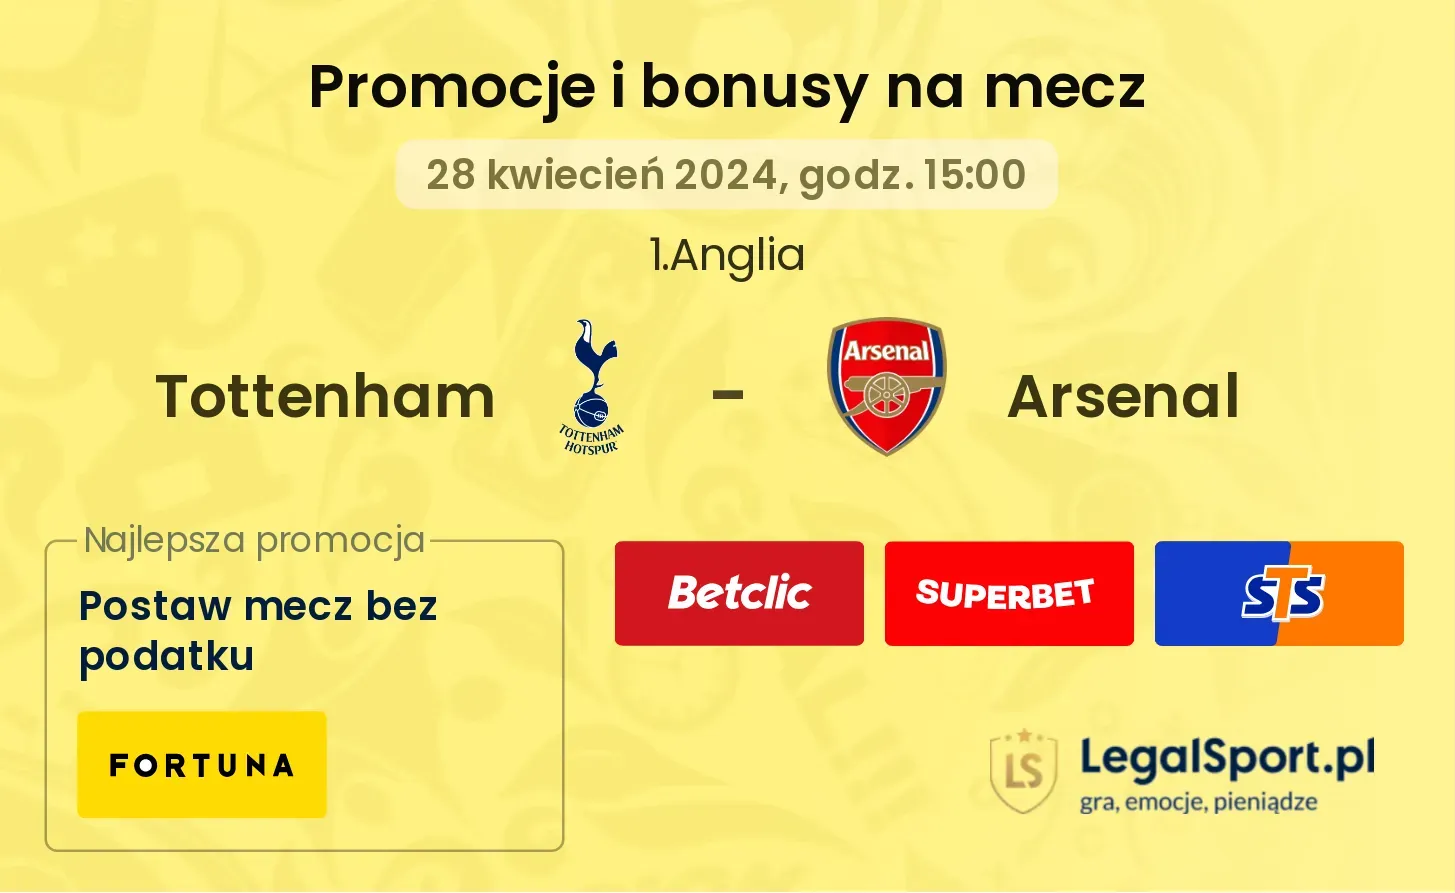 Tottenham - Arsenal promocje i bonusy (28.04, 15:00)